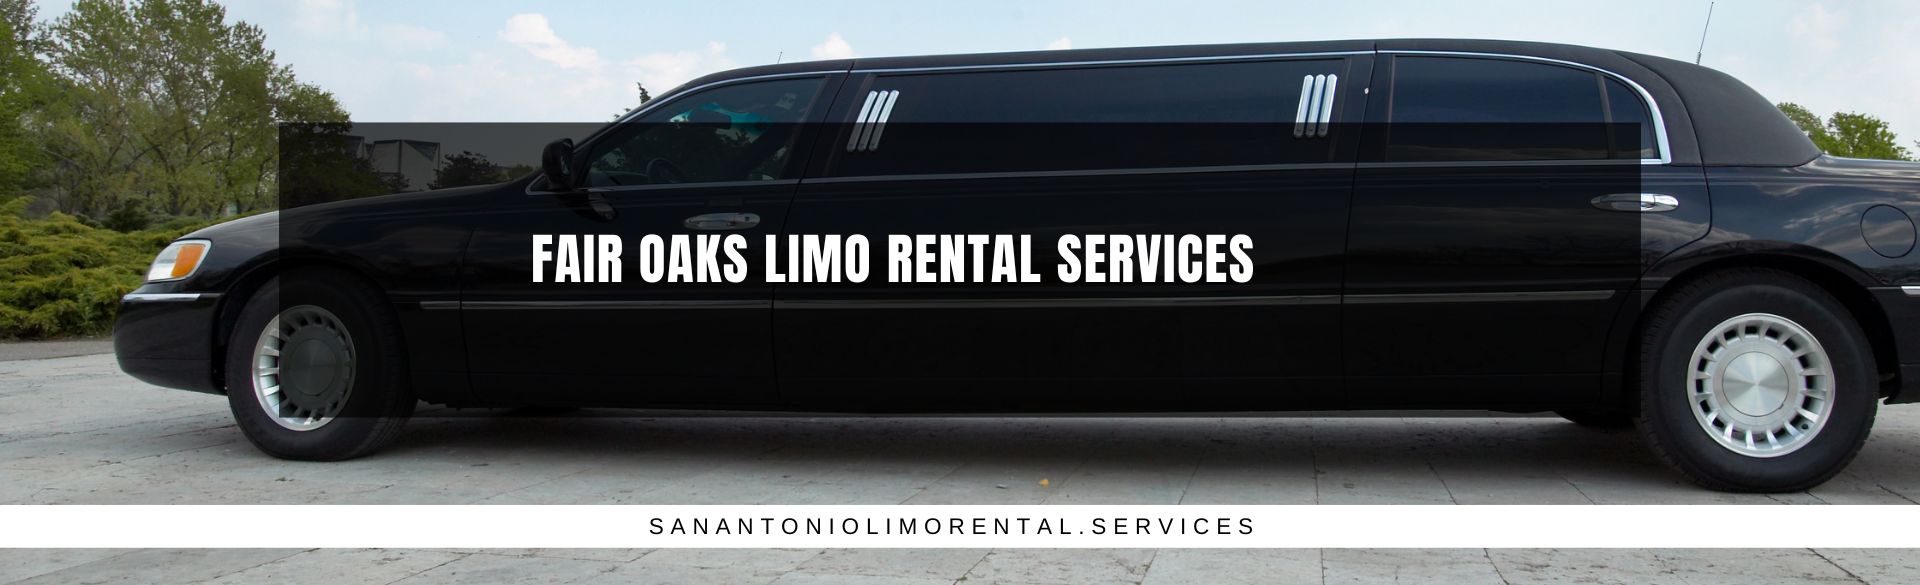 Fair Oaks Limo Rental Services